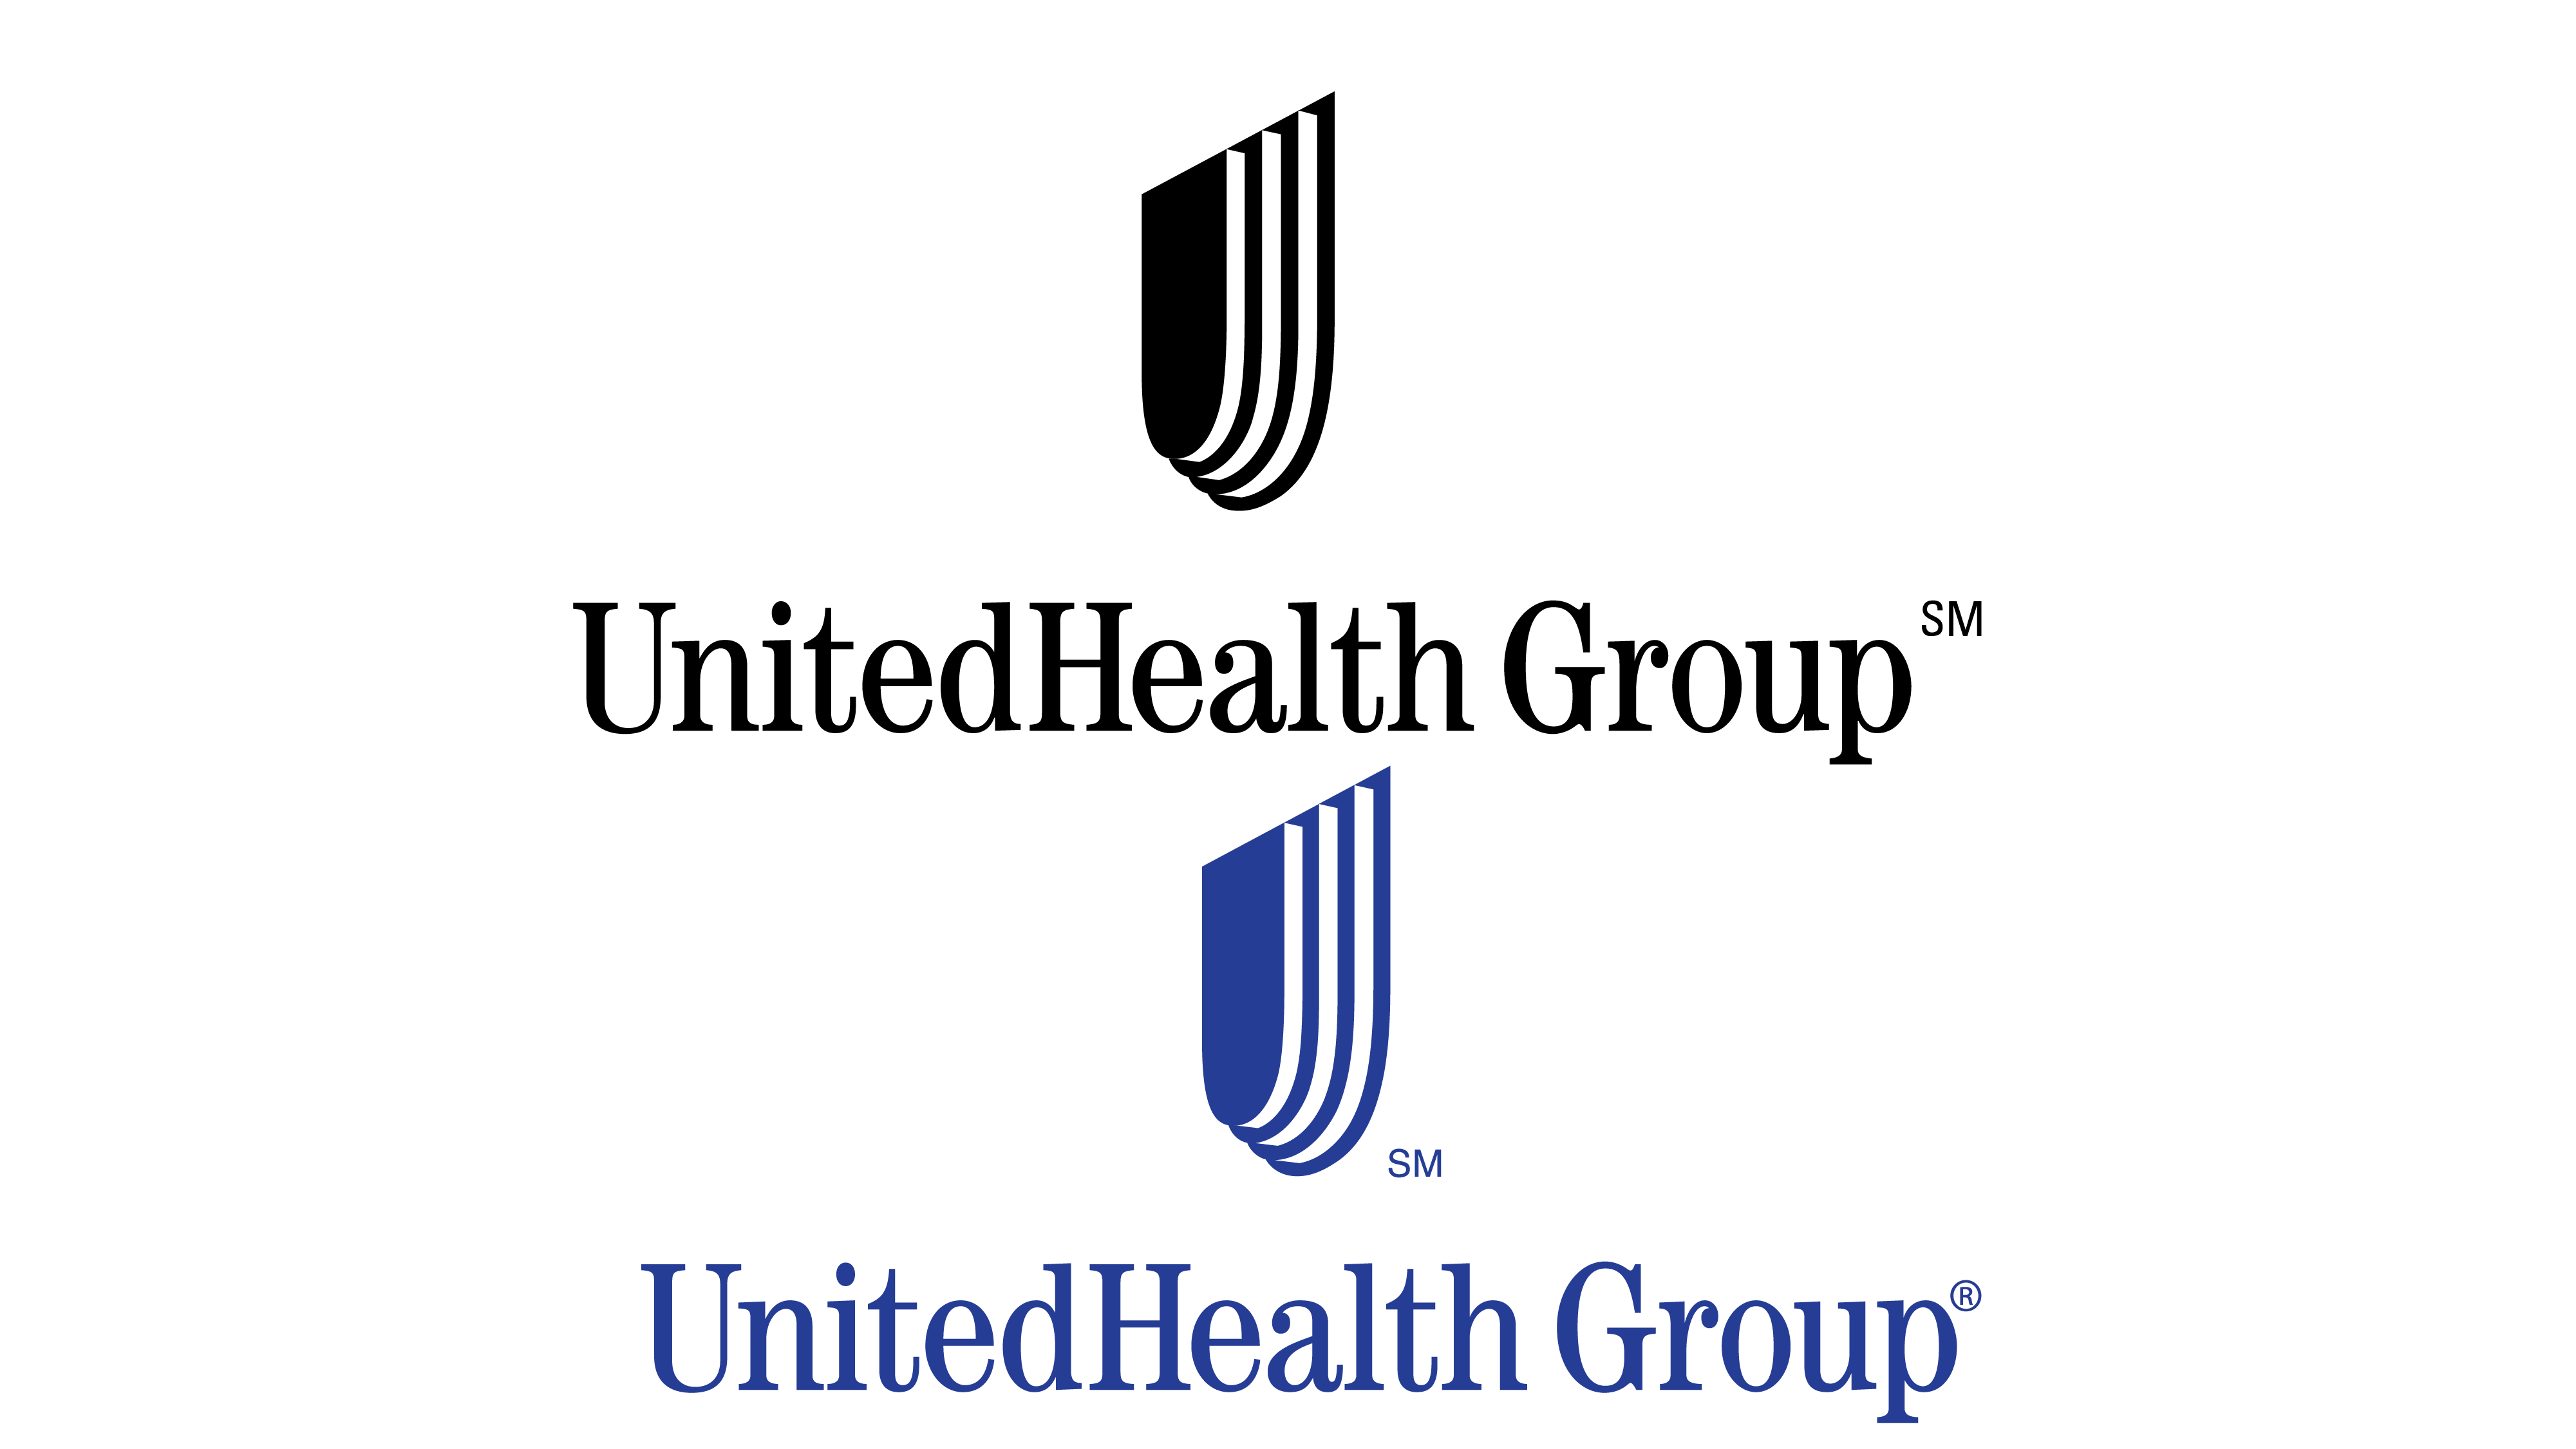 unite health group